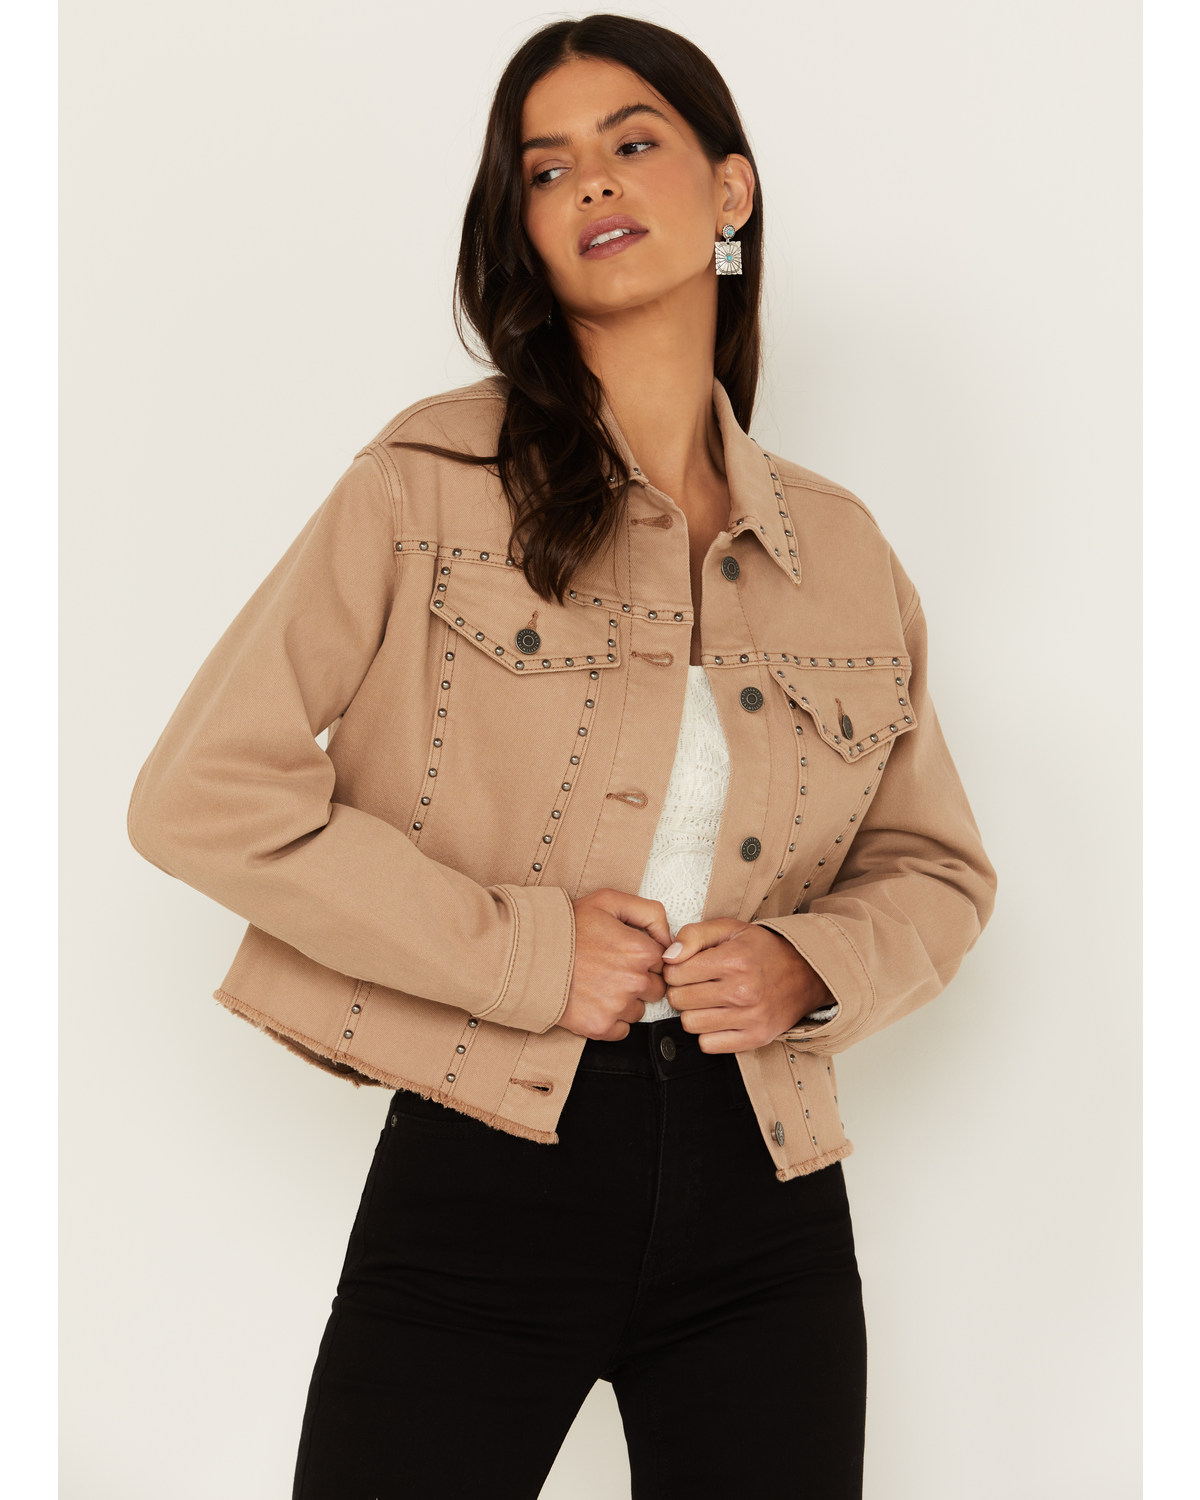 Idyllwind Women's Studded Cropped Jacket